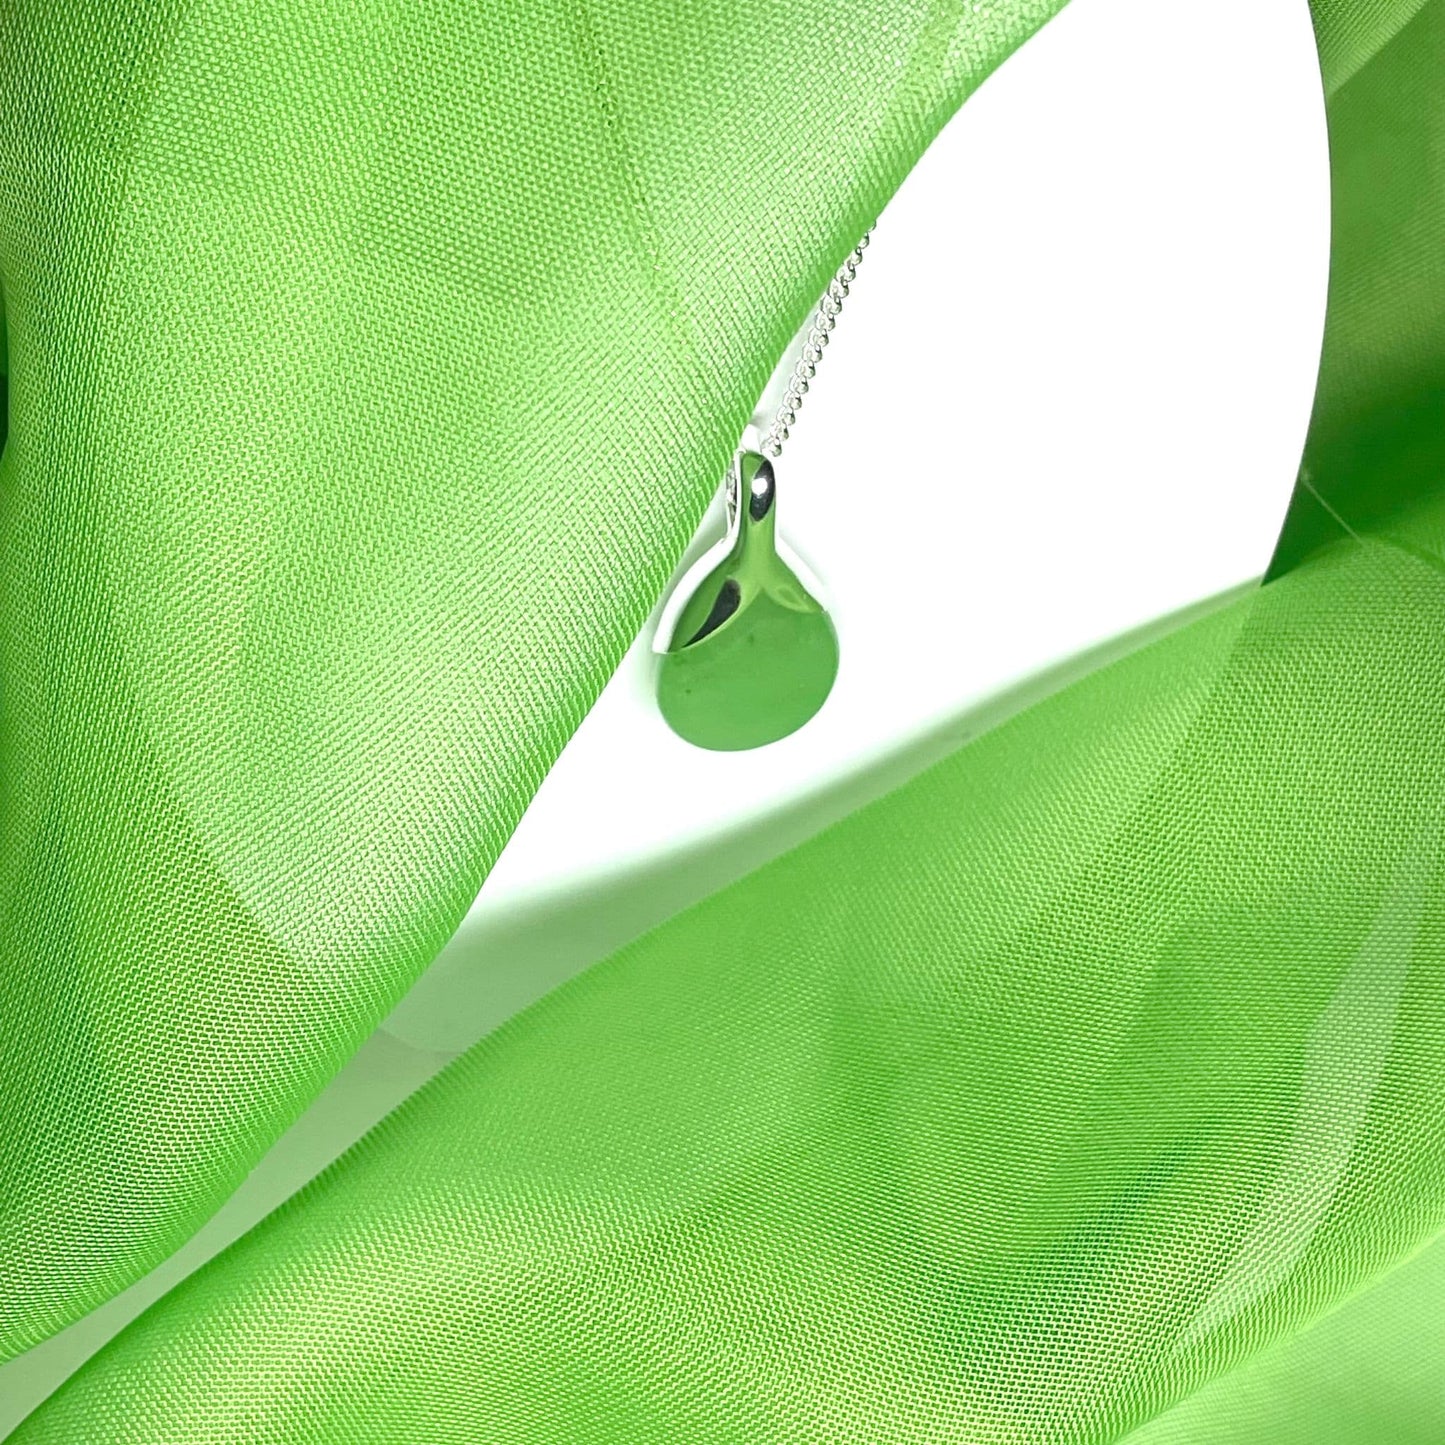 Real green jade tear drop sterling silver pear shaped pendant